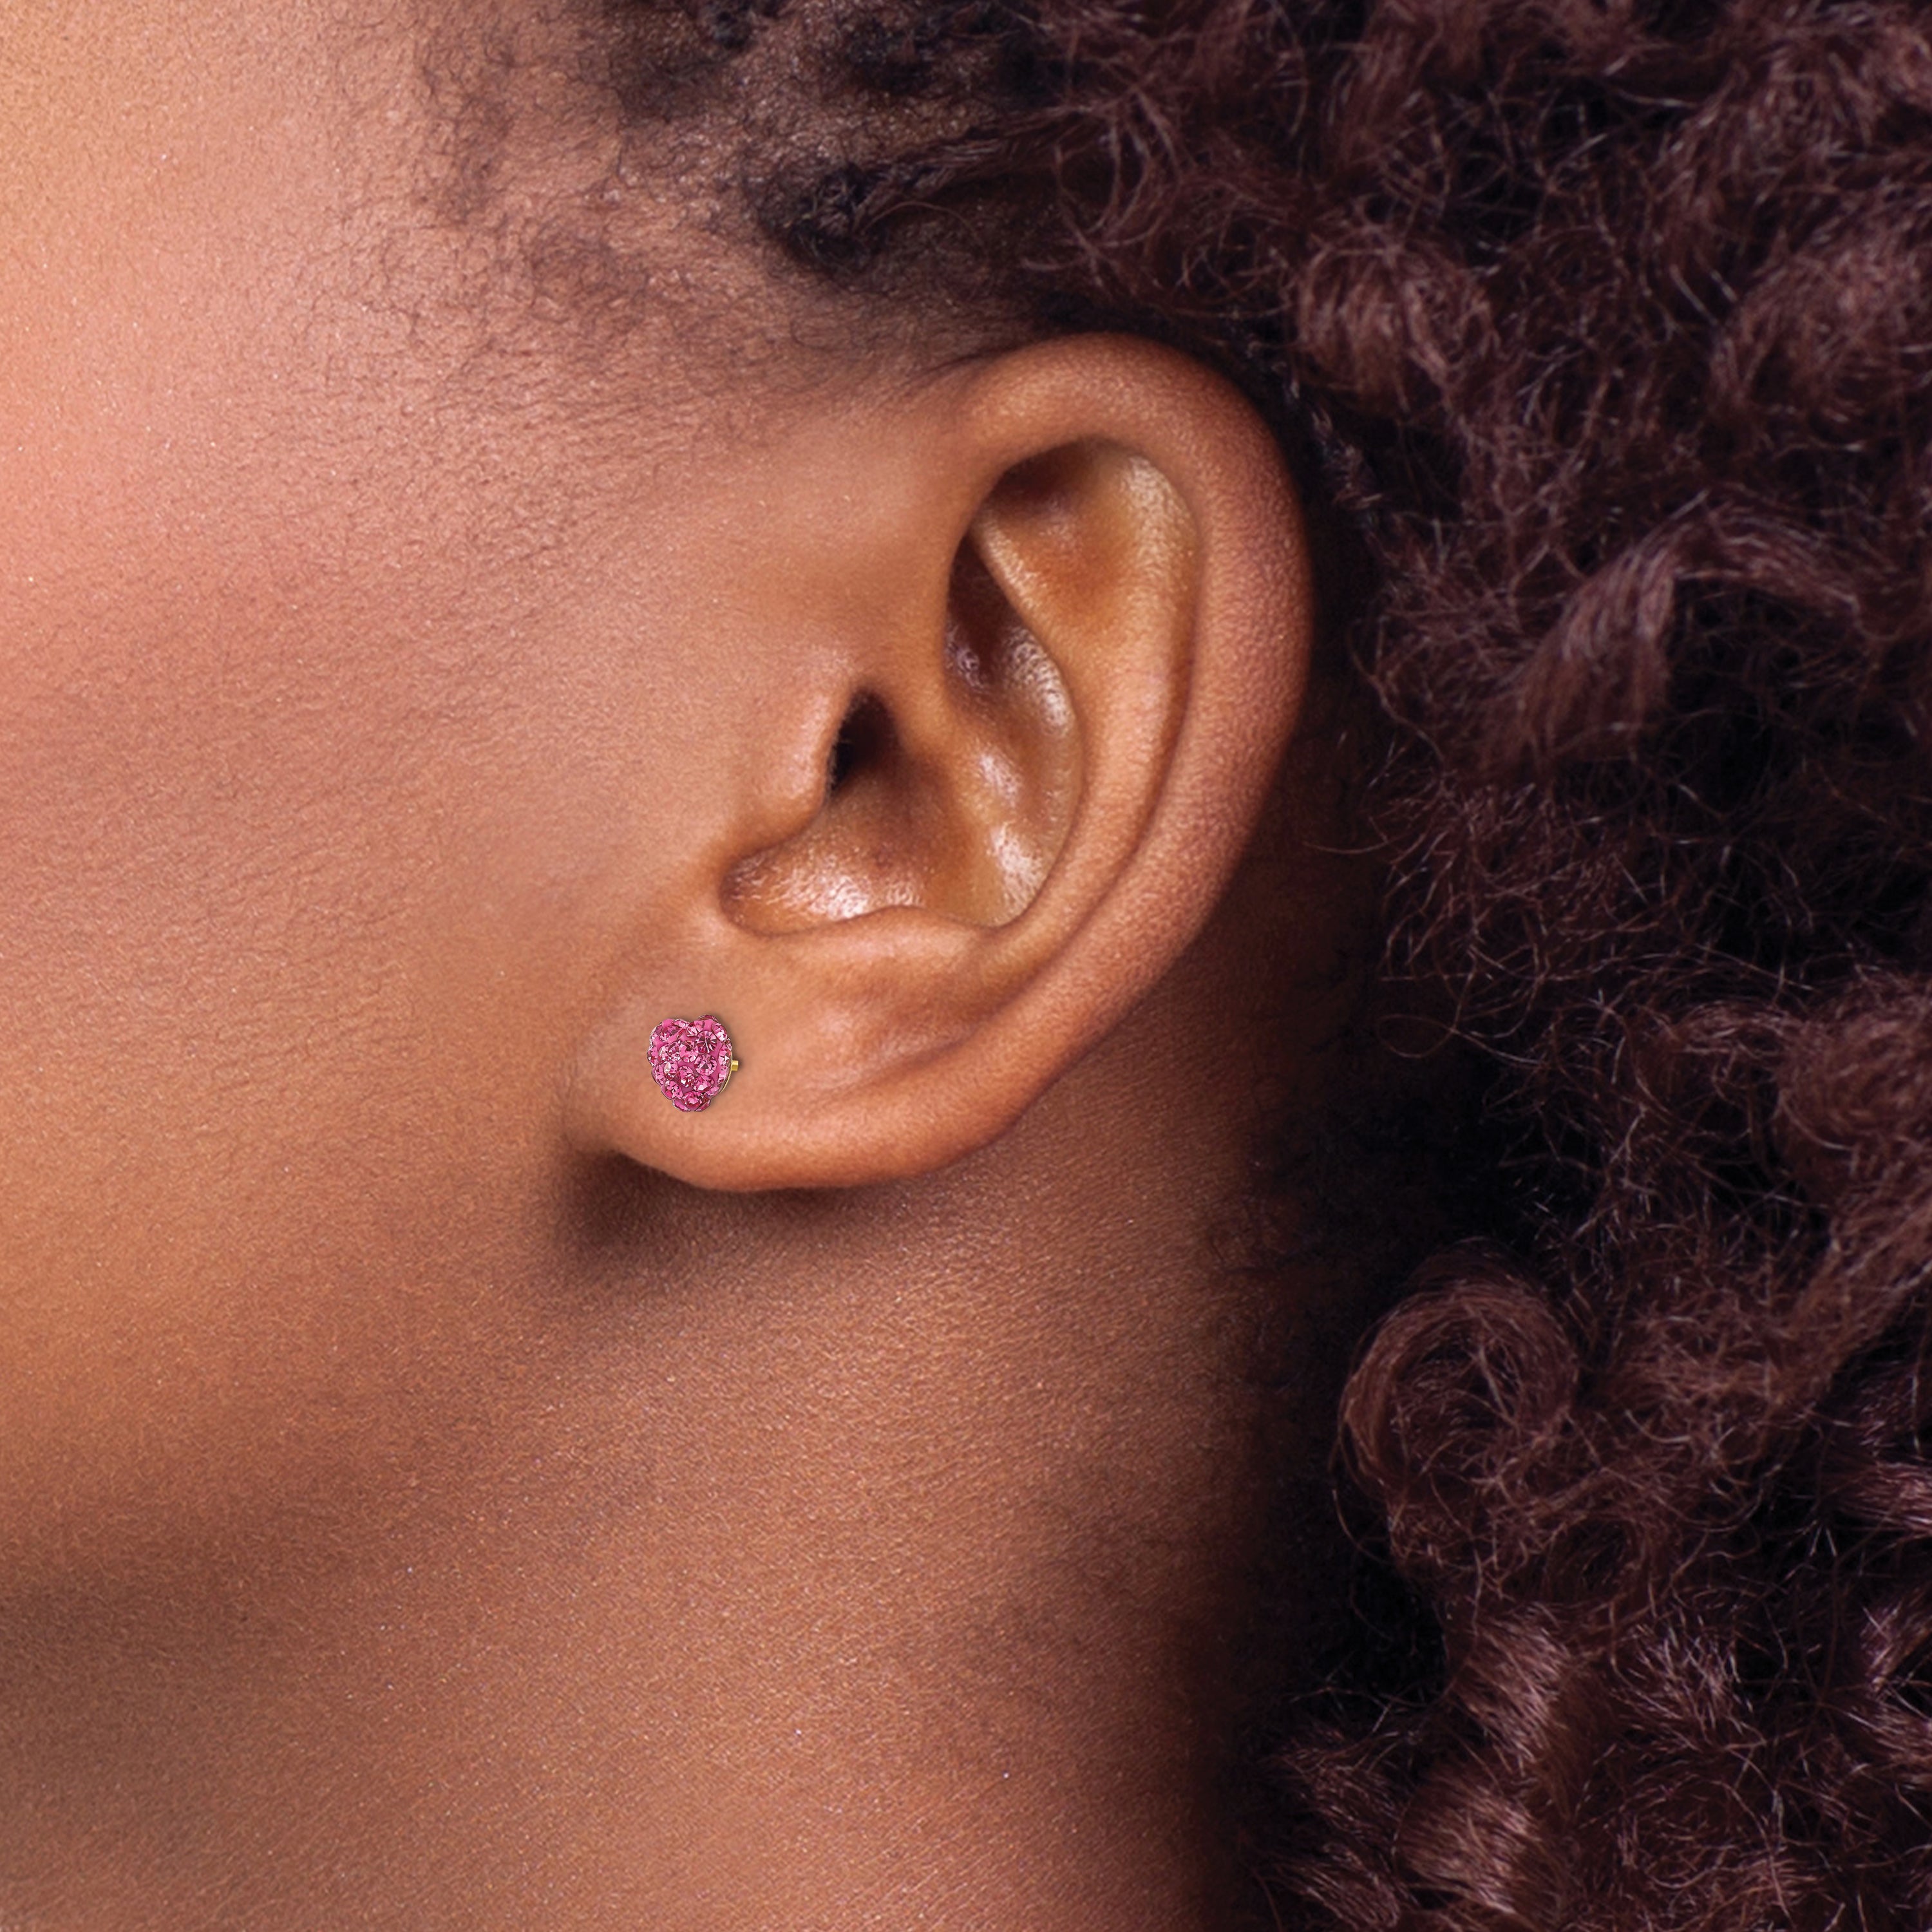 14k Madi K Post Multi Pink Crystal Heart Earrings